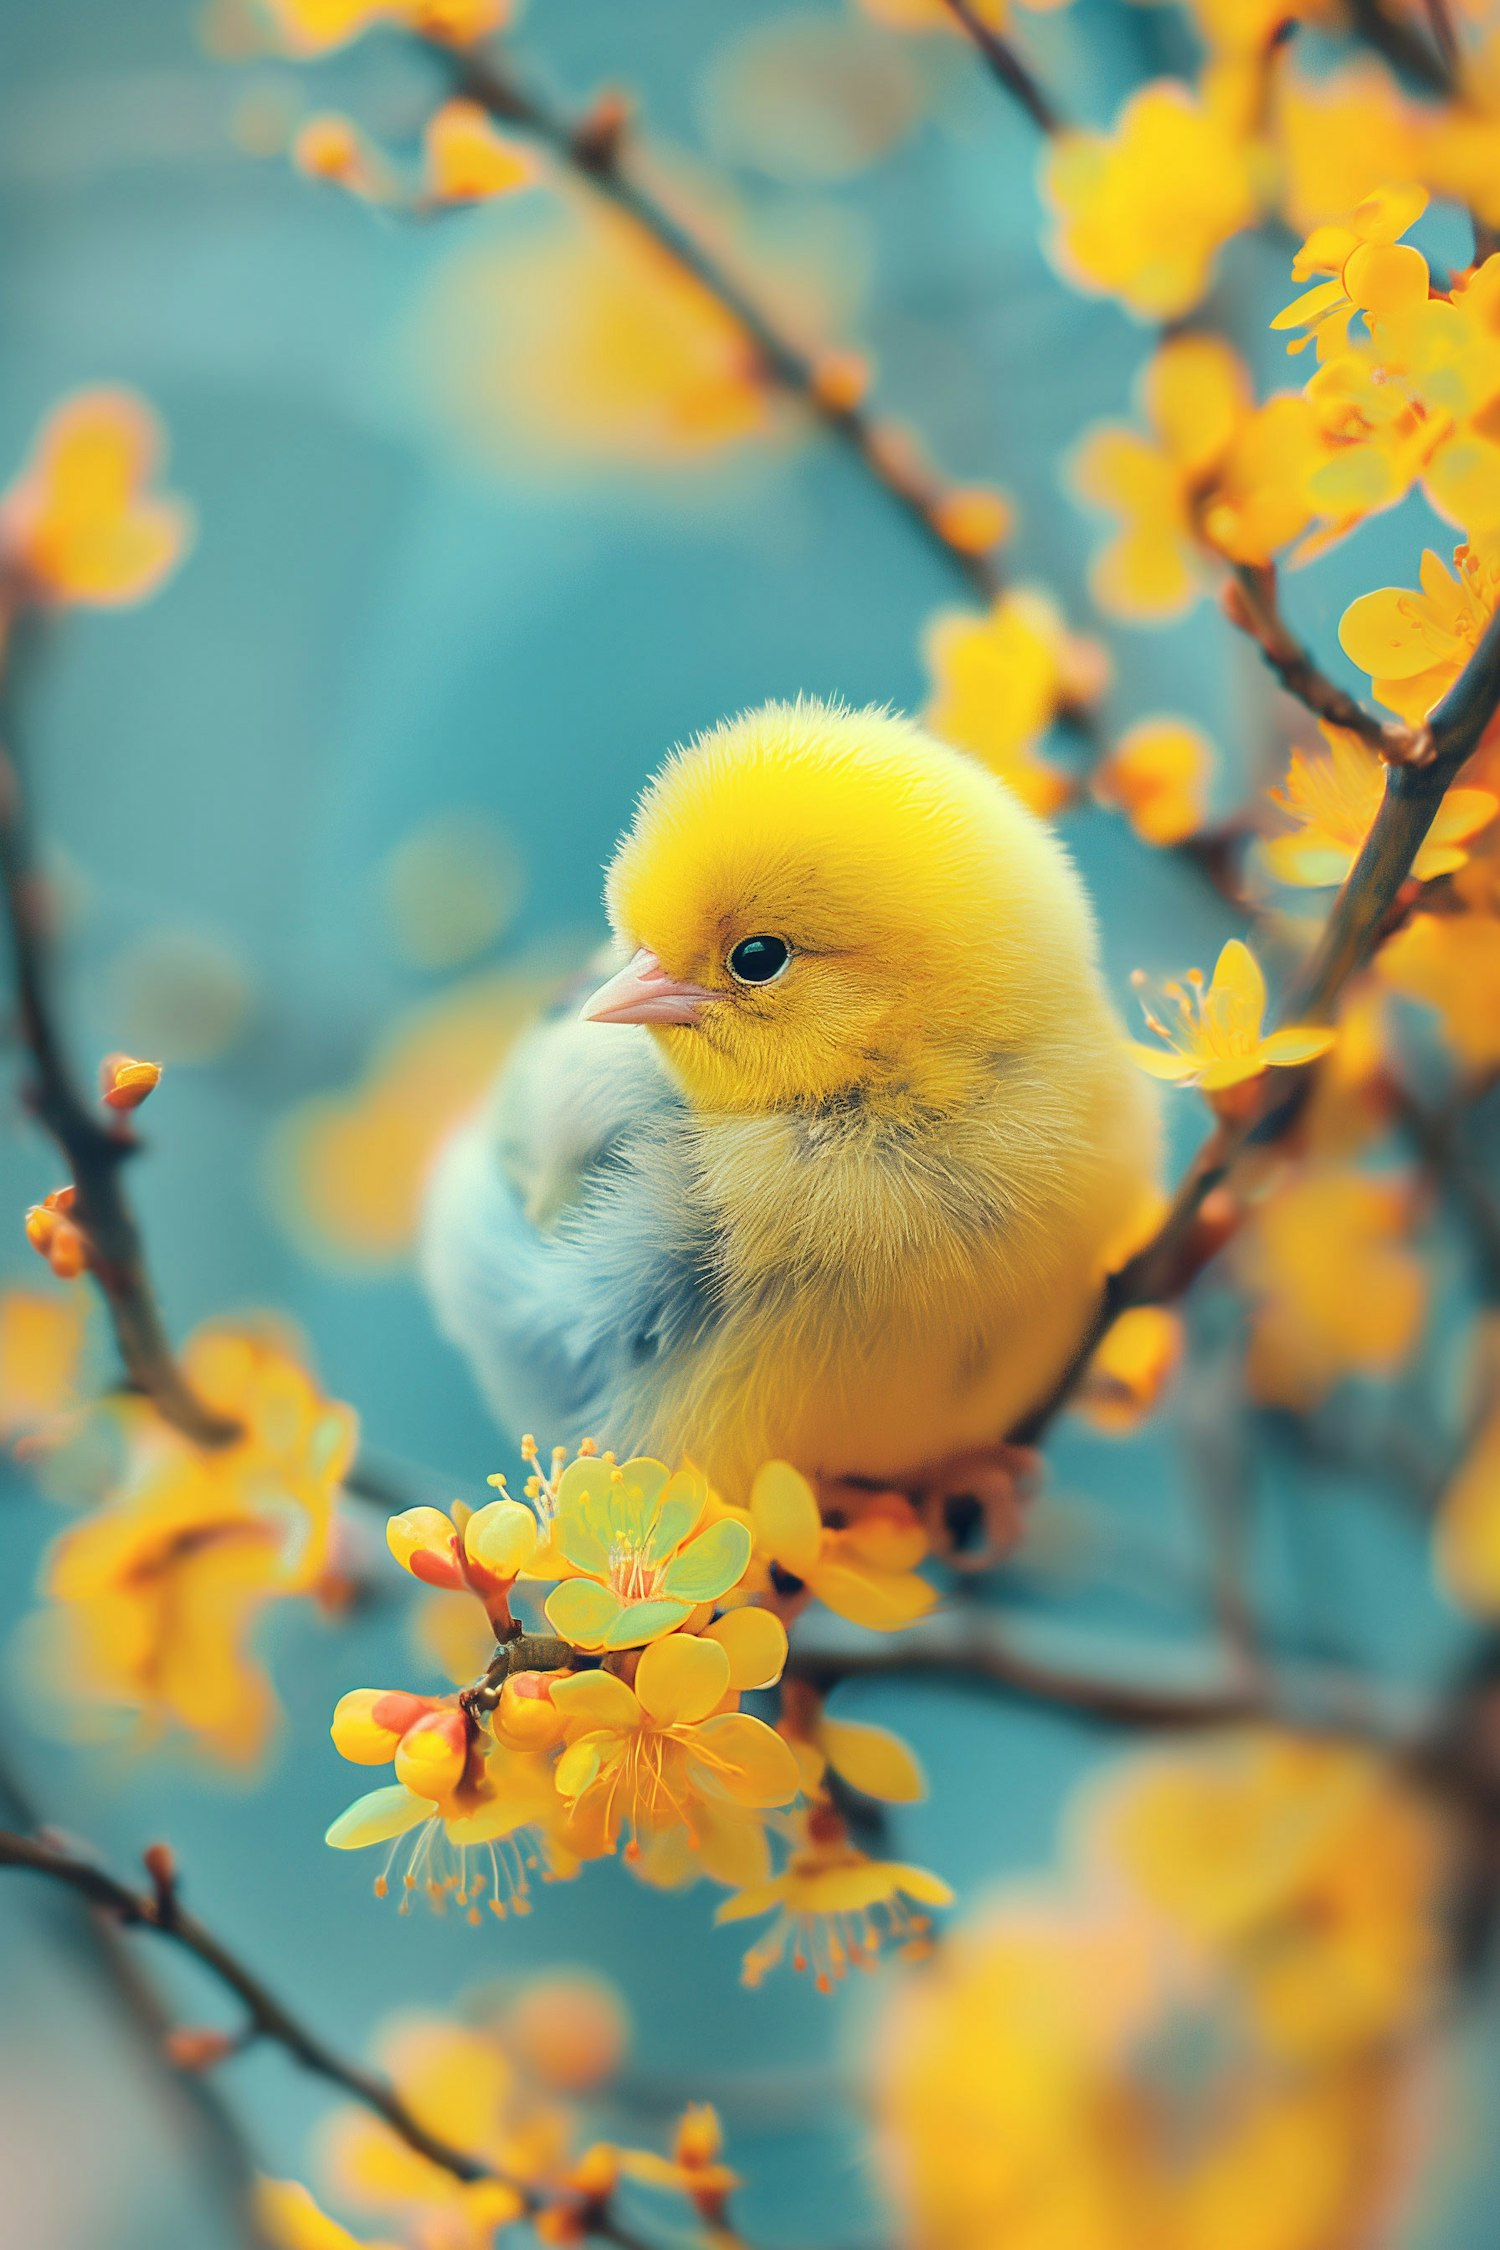 Springtime Chick among Blossoms